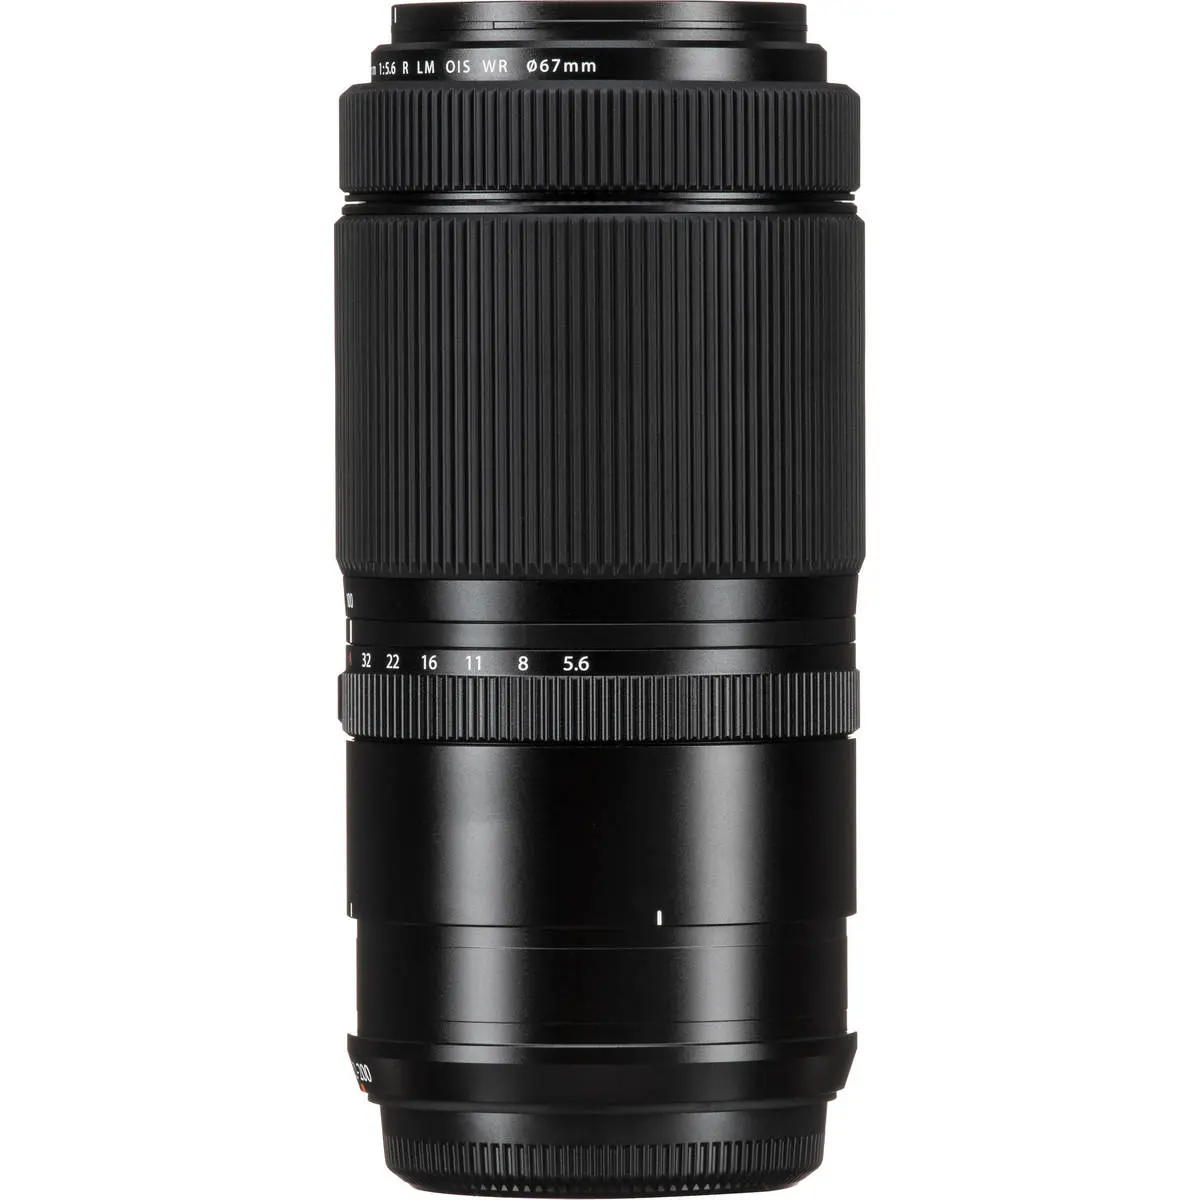 6. Fujinon GF 100-200mm F5.6 R LM OIS WR Lens